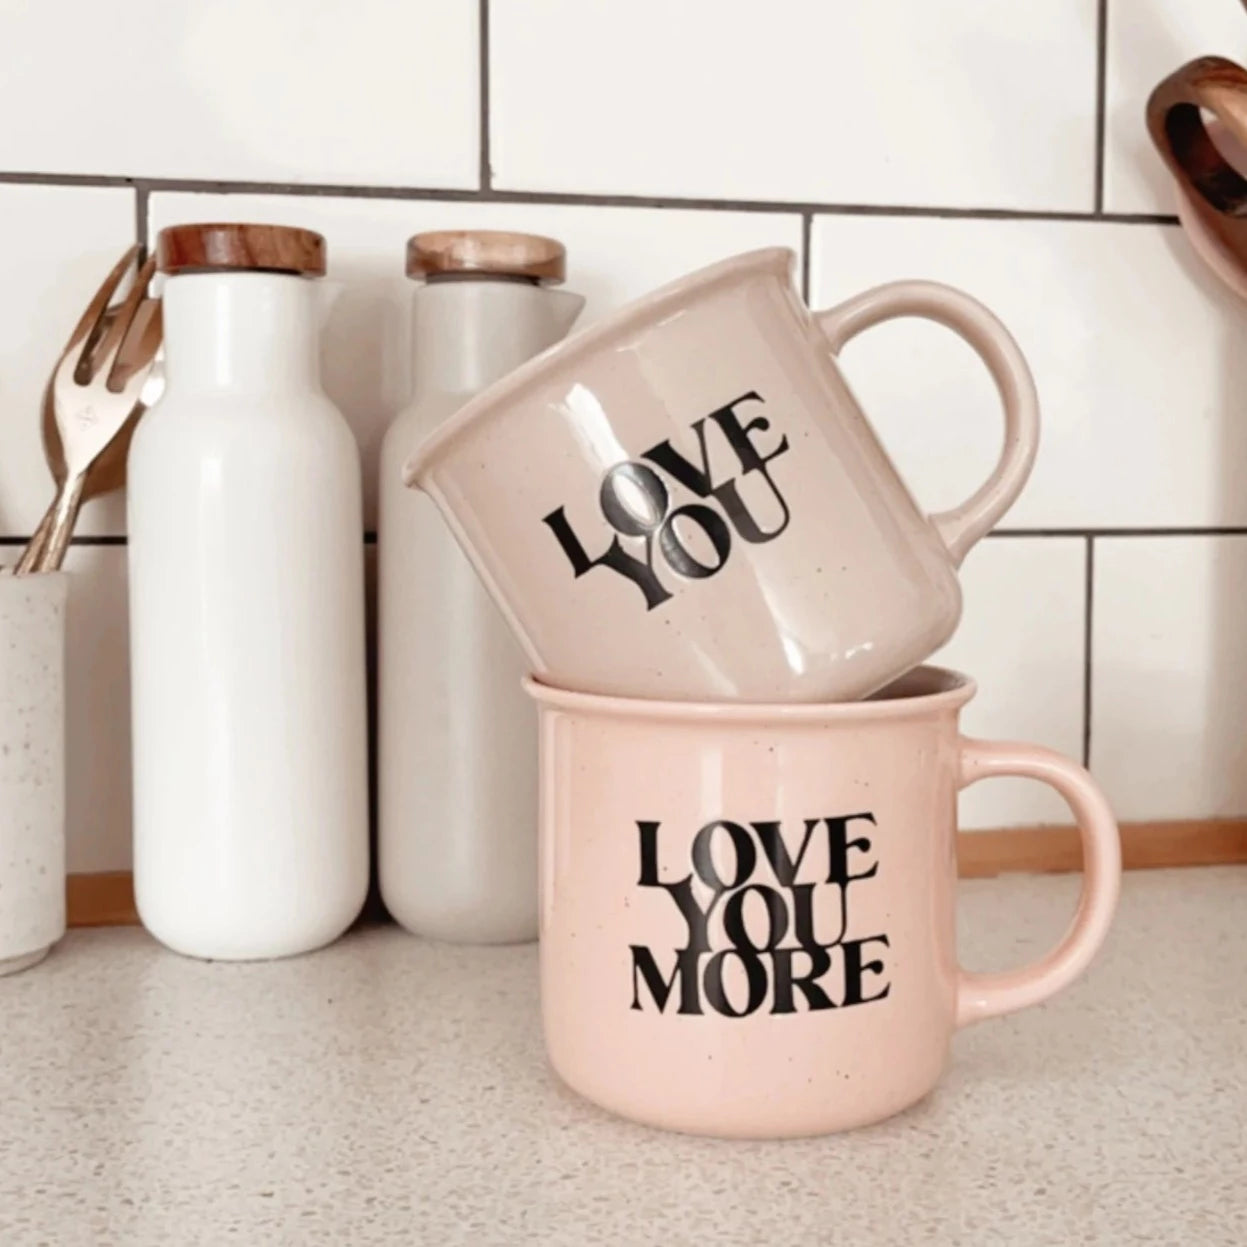 bencer and hazelnut ceramic mug set - angus and dudley